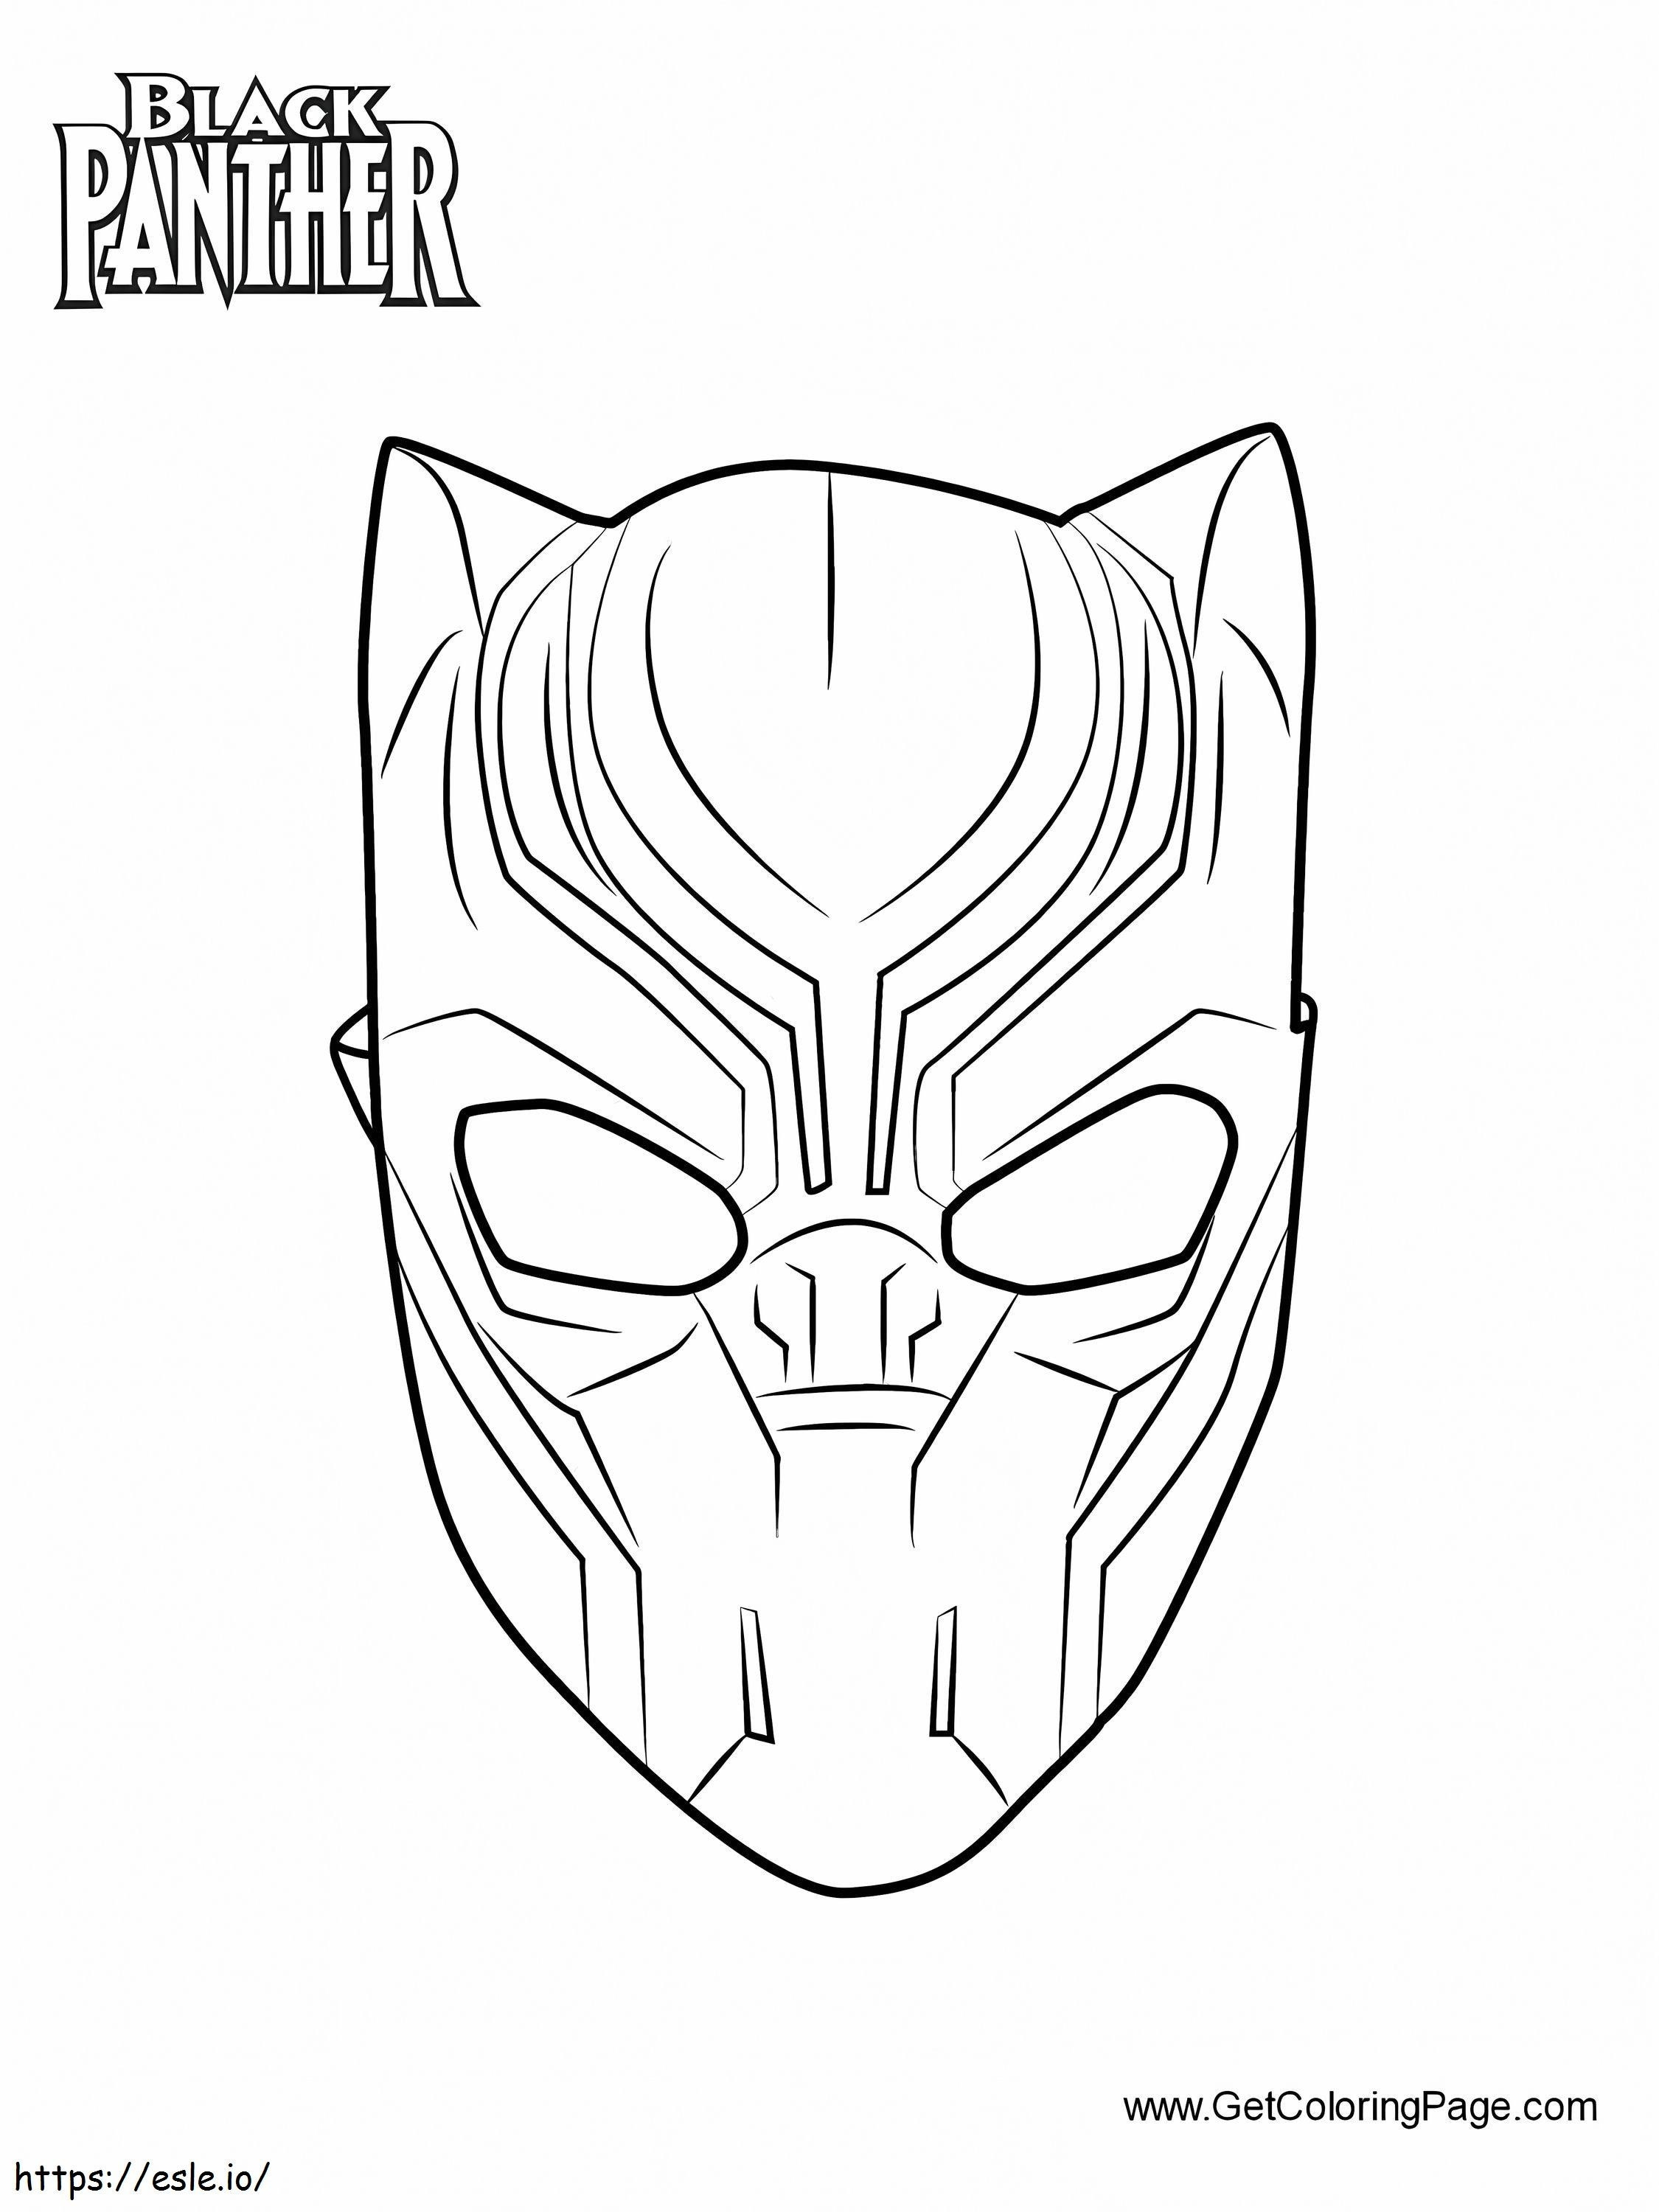 1539414888 Black Panther Mask Printable coloring page